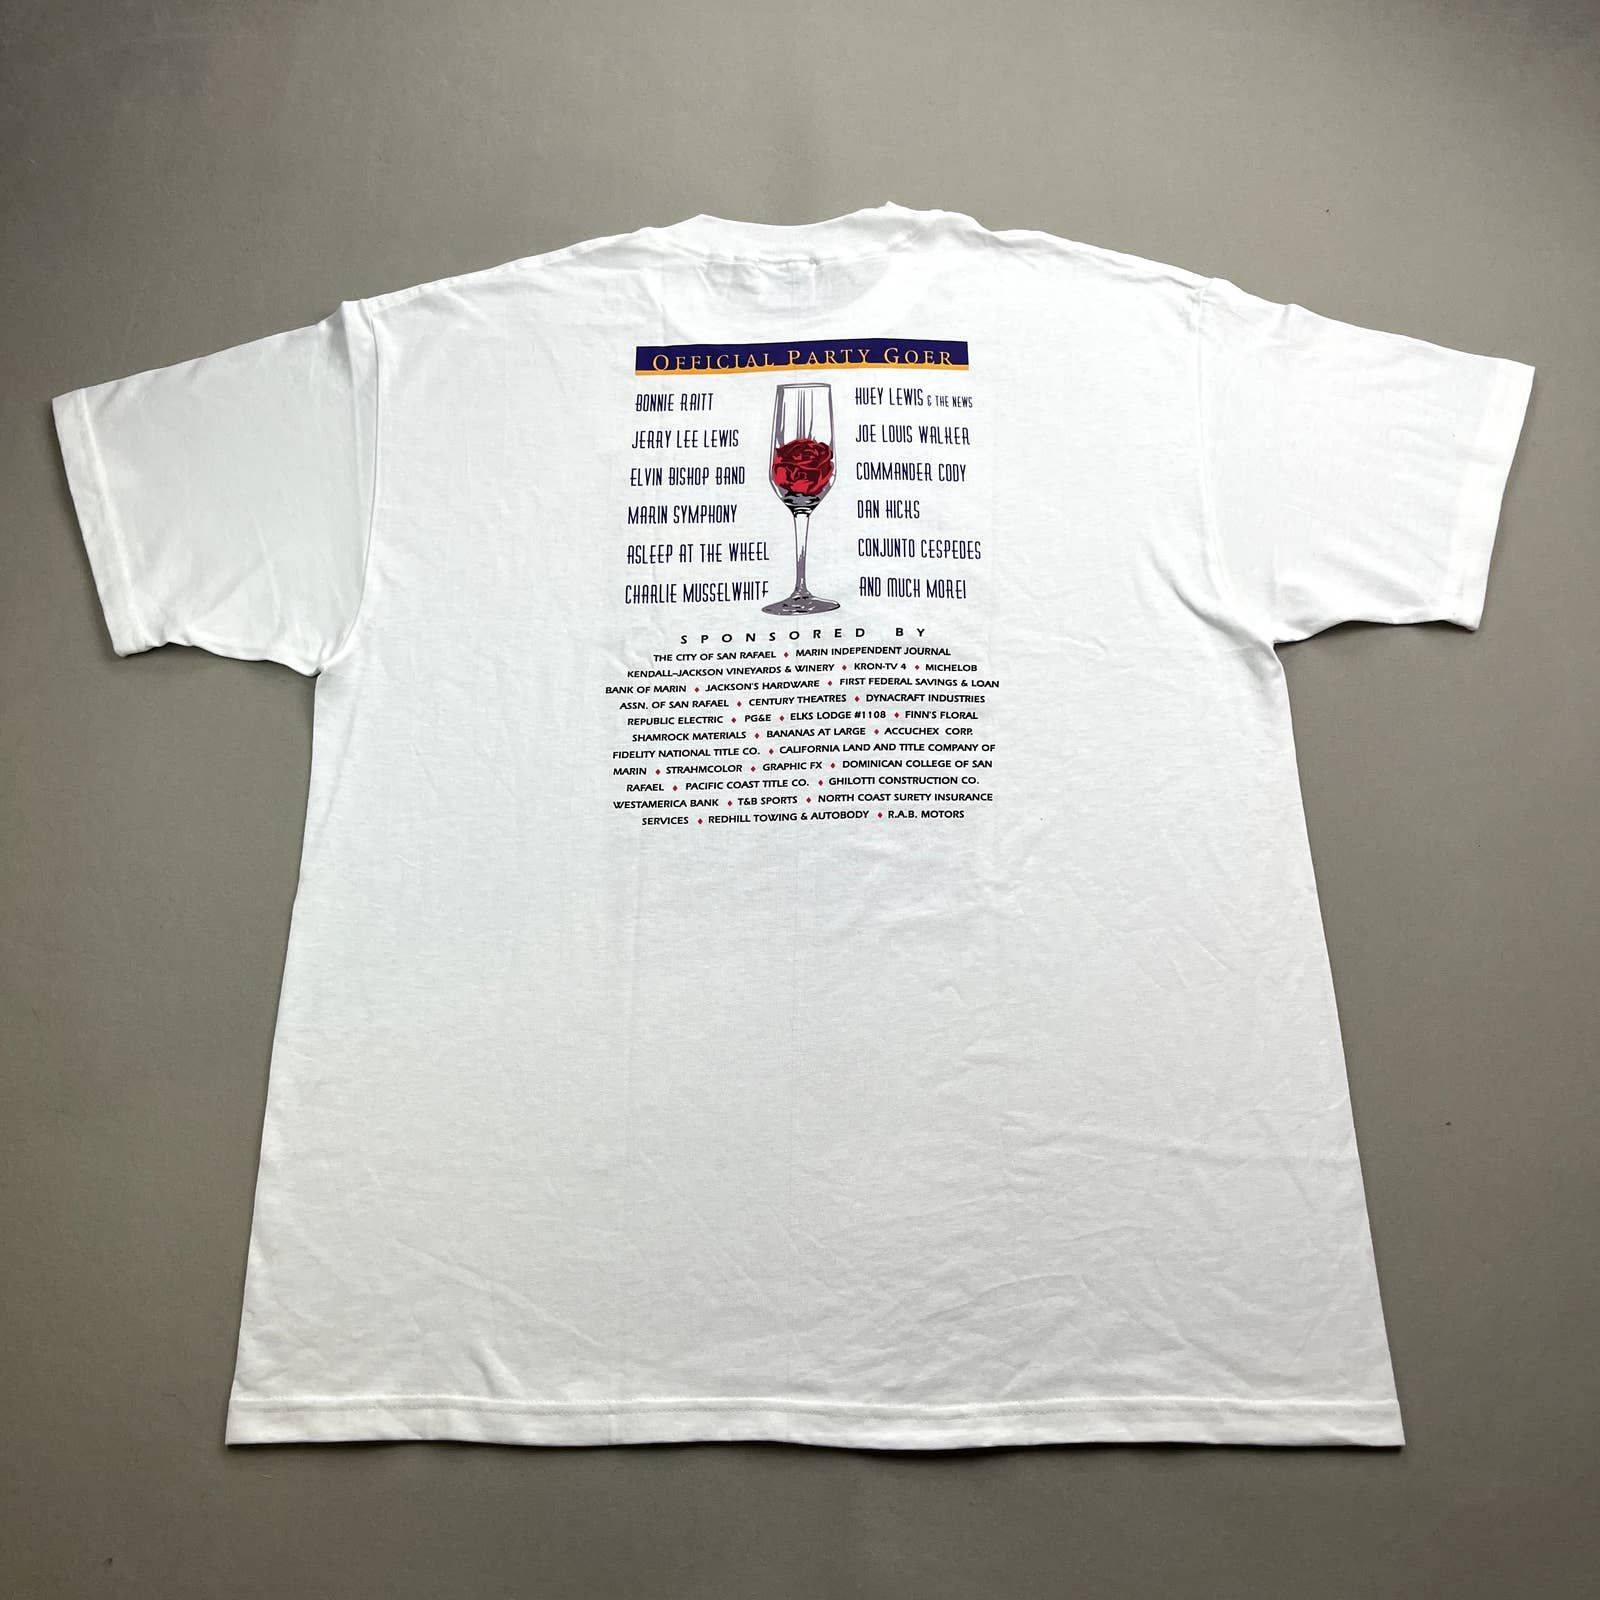 Vintage Vintage Jazz Music T-Shirt XL White Huey Lewis Winery Art Size US XL / EU 56 / 4 - 4 Thumbnail